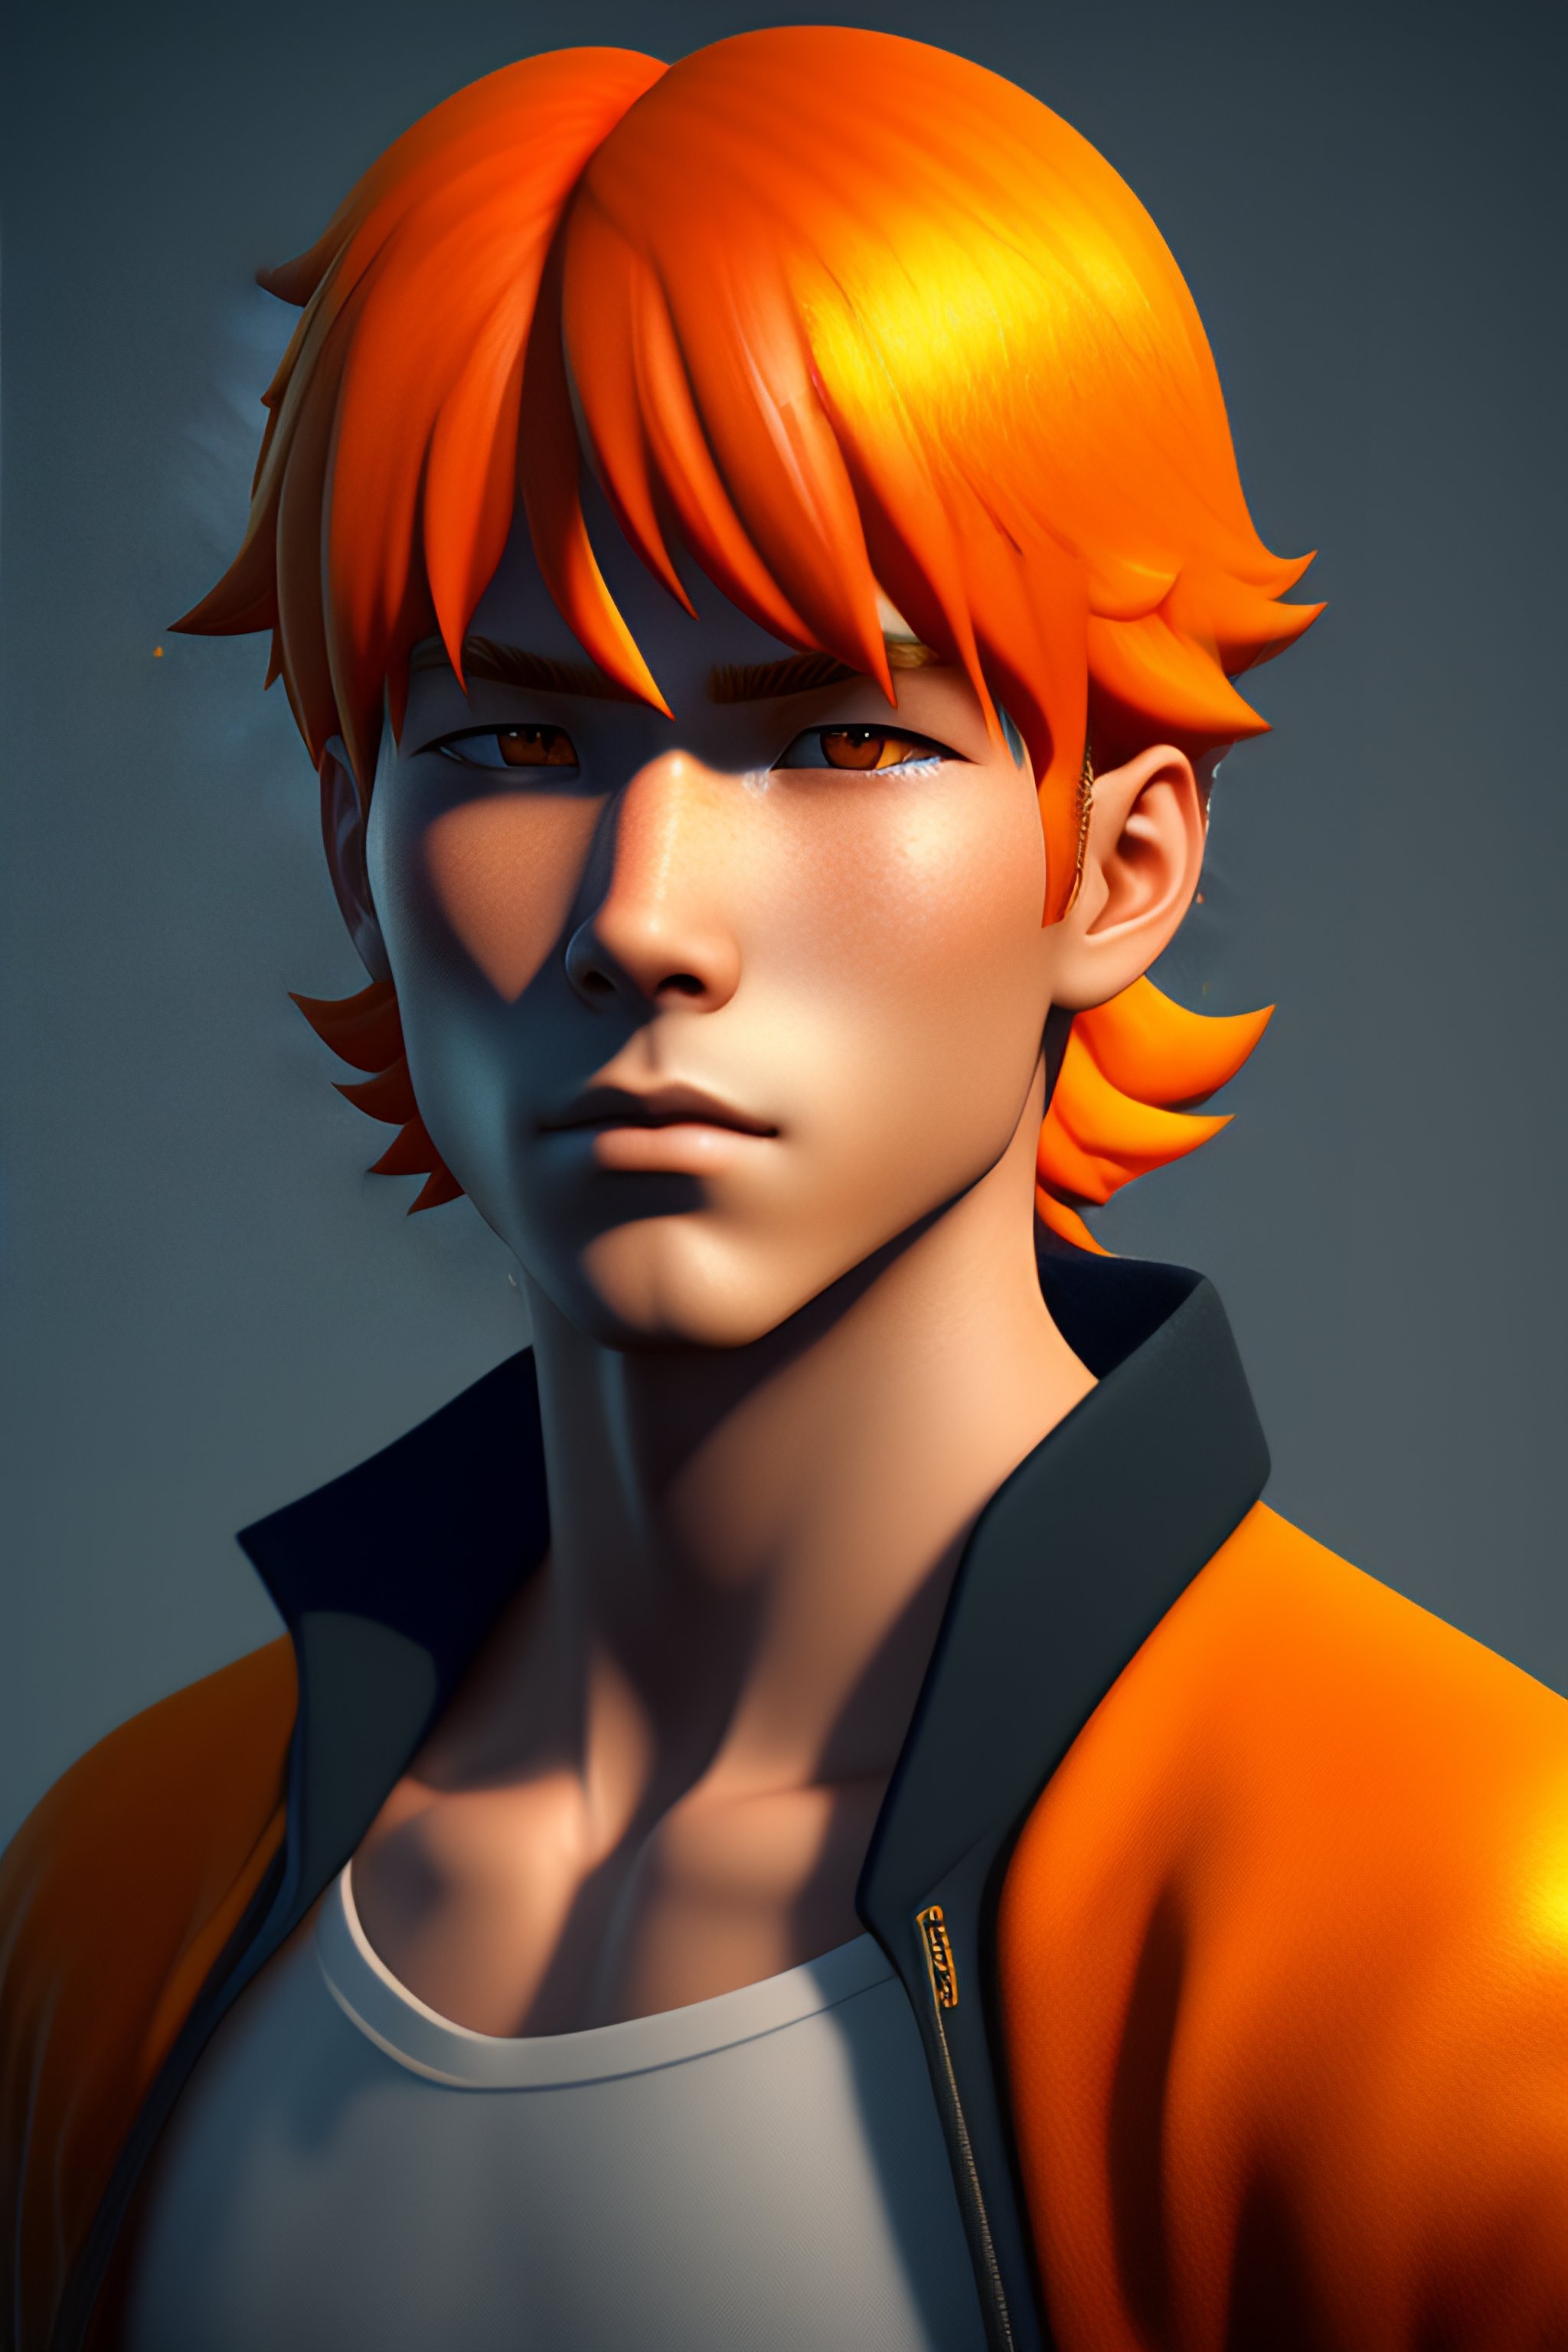 anime guy with orange hair